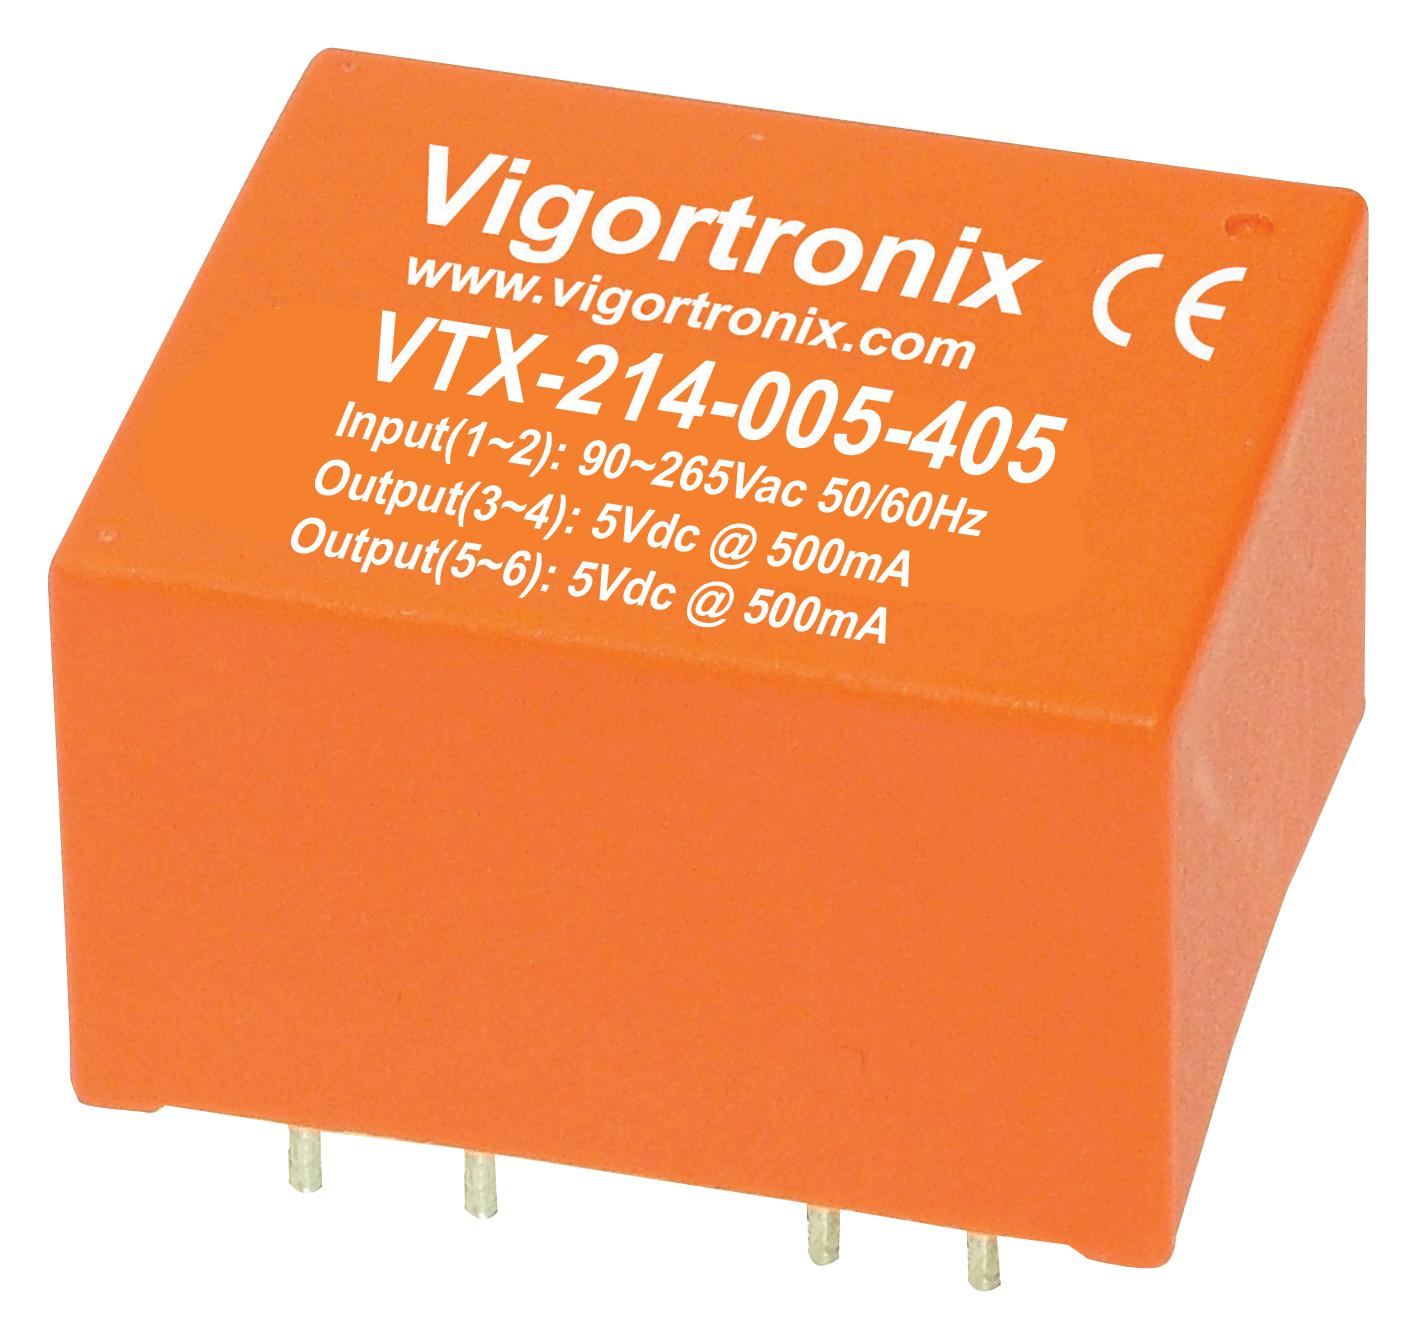 VTX-214-005-405 POWER SUPPLY, AC-DC, 5V, 0.5A VIGORTRONIX